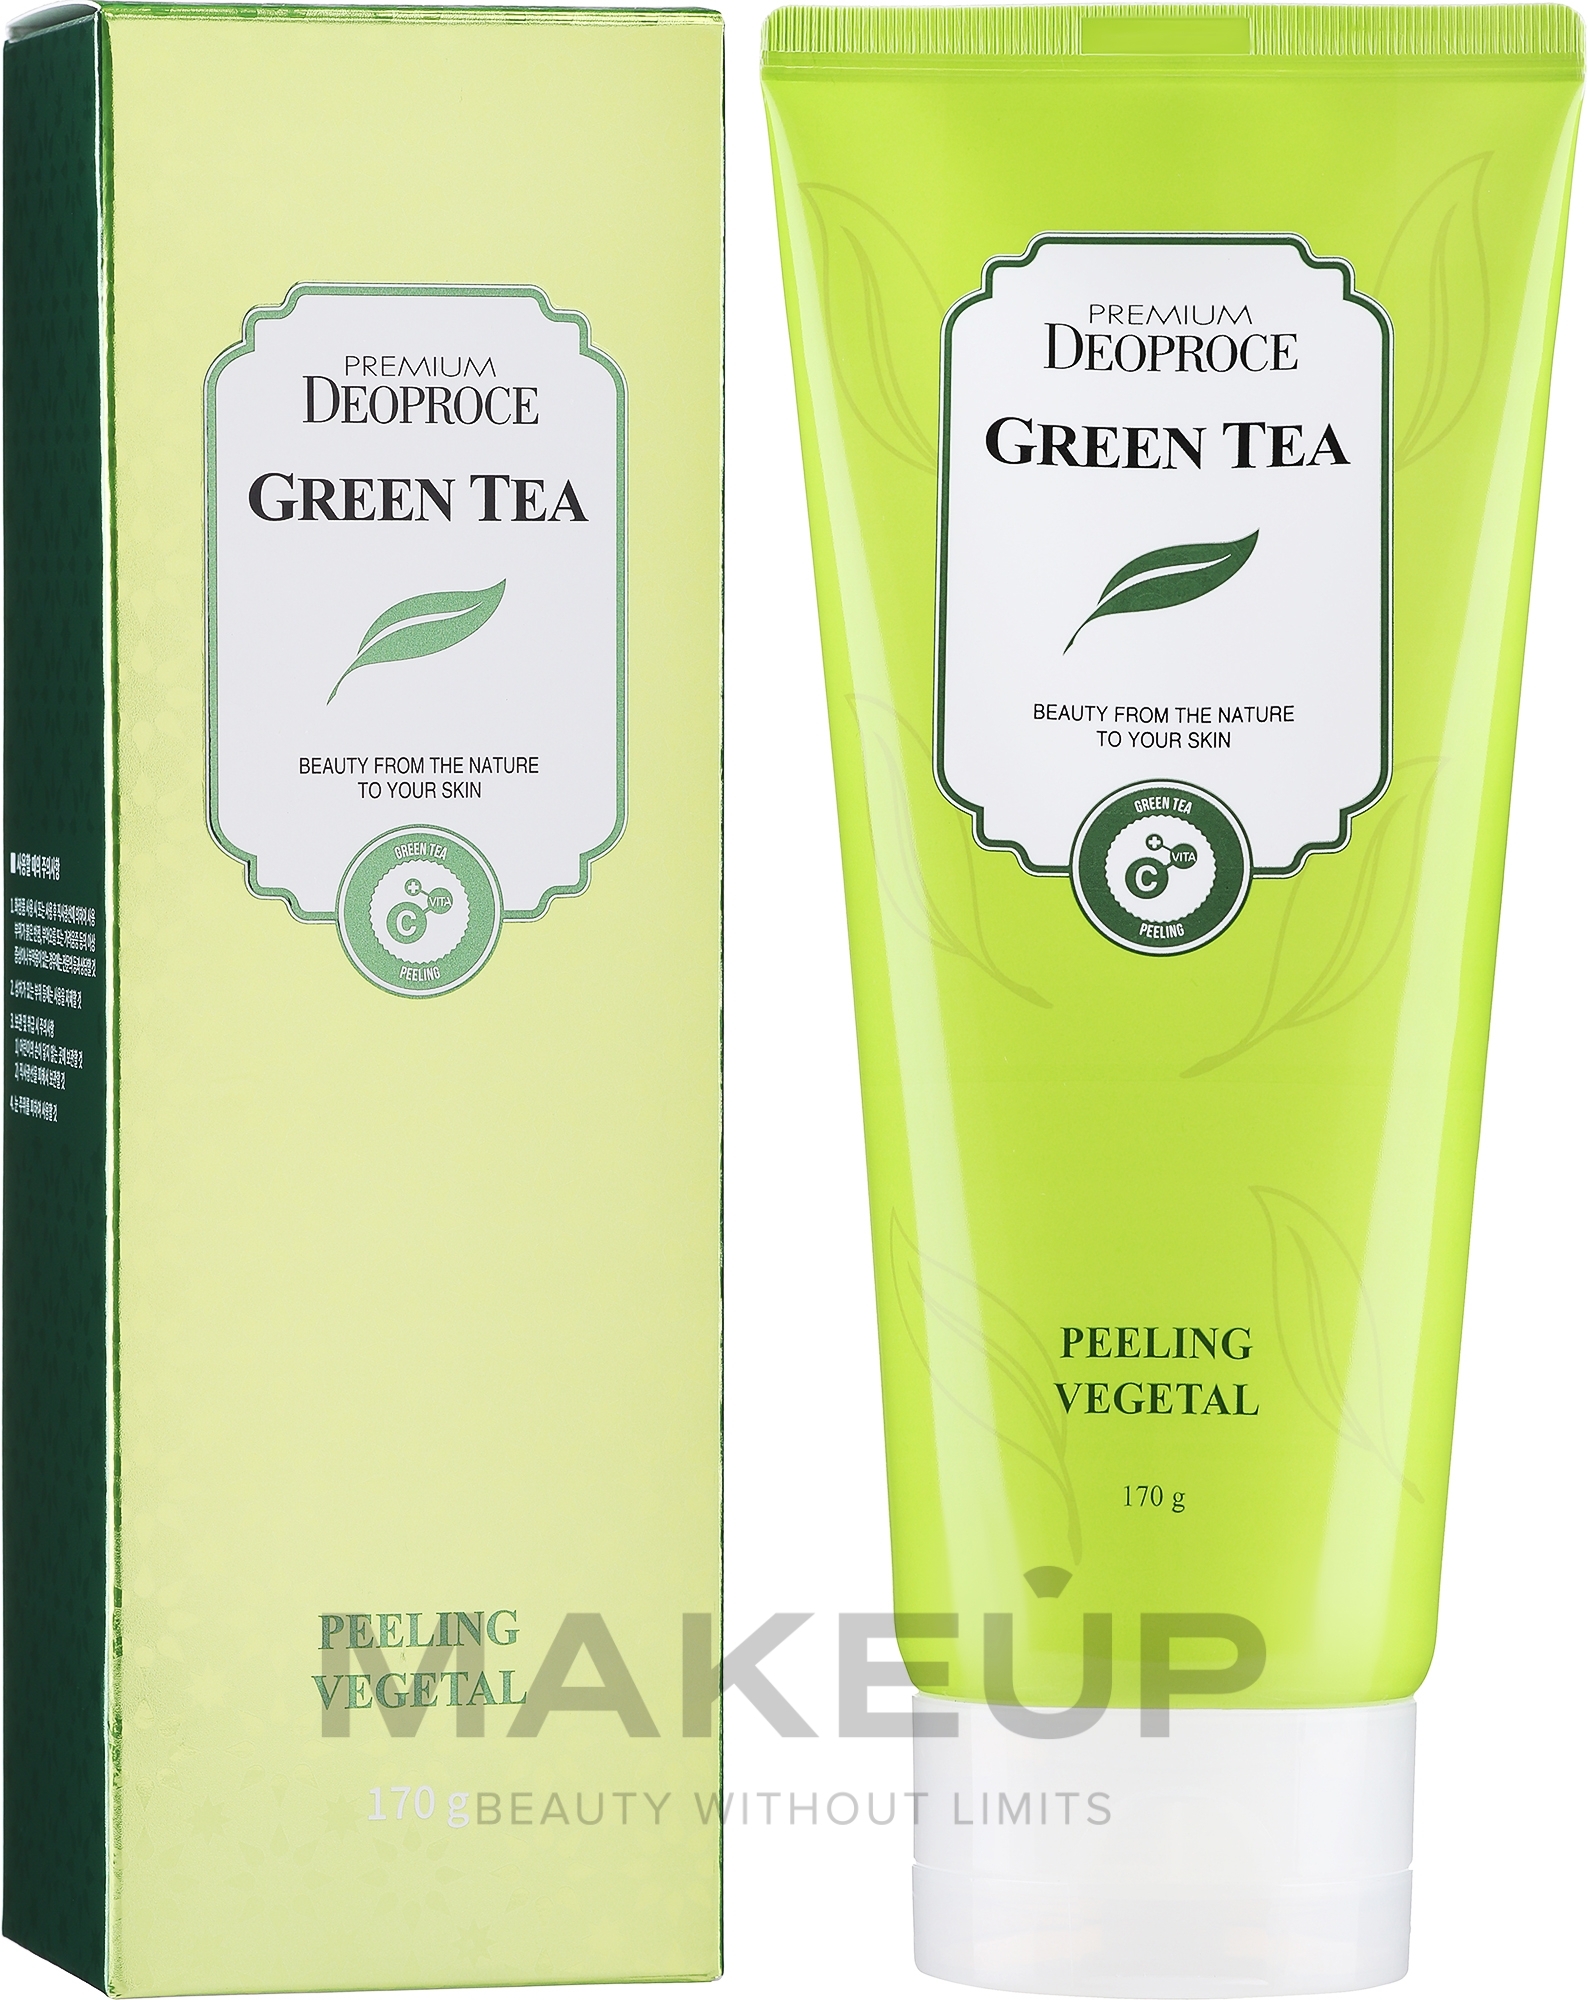 Пилинг-скатка на основе зеленого чая - Deoproce Premium Green Tea Peeling Vegetal — фото 170g